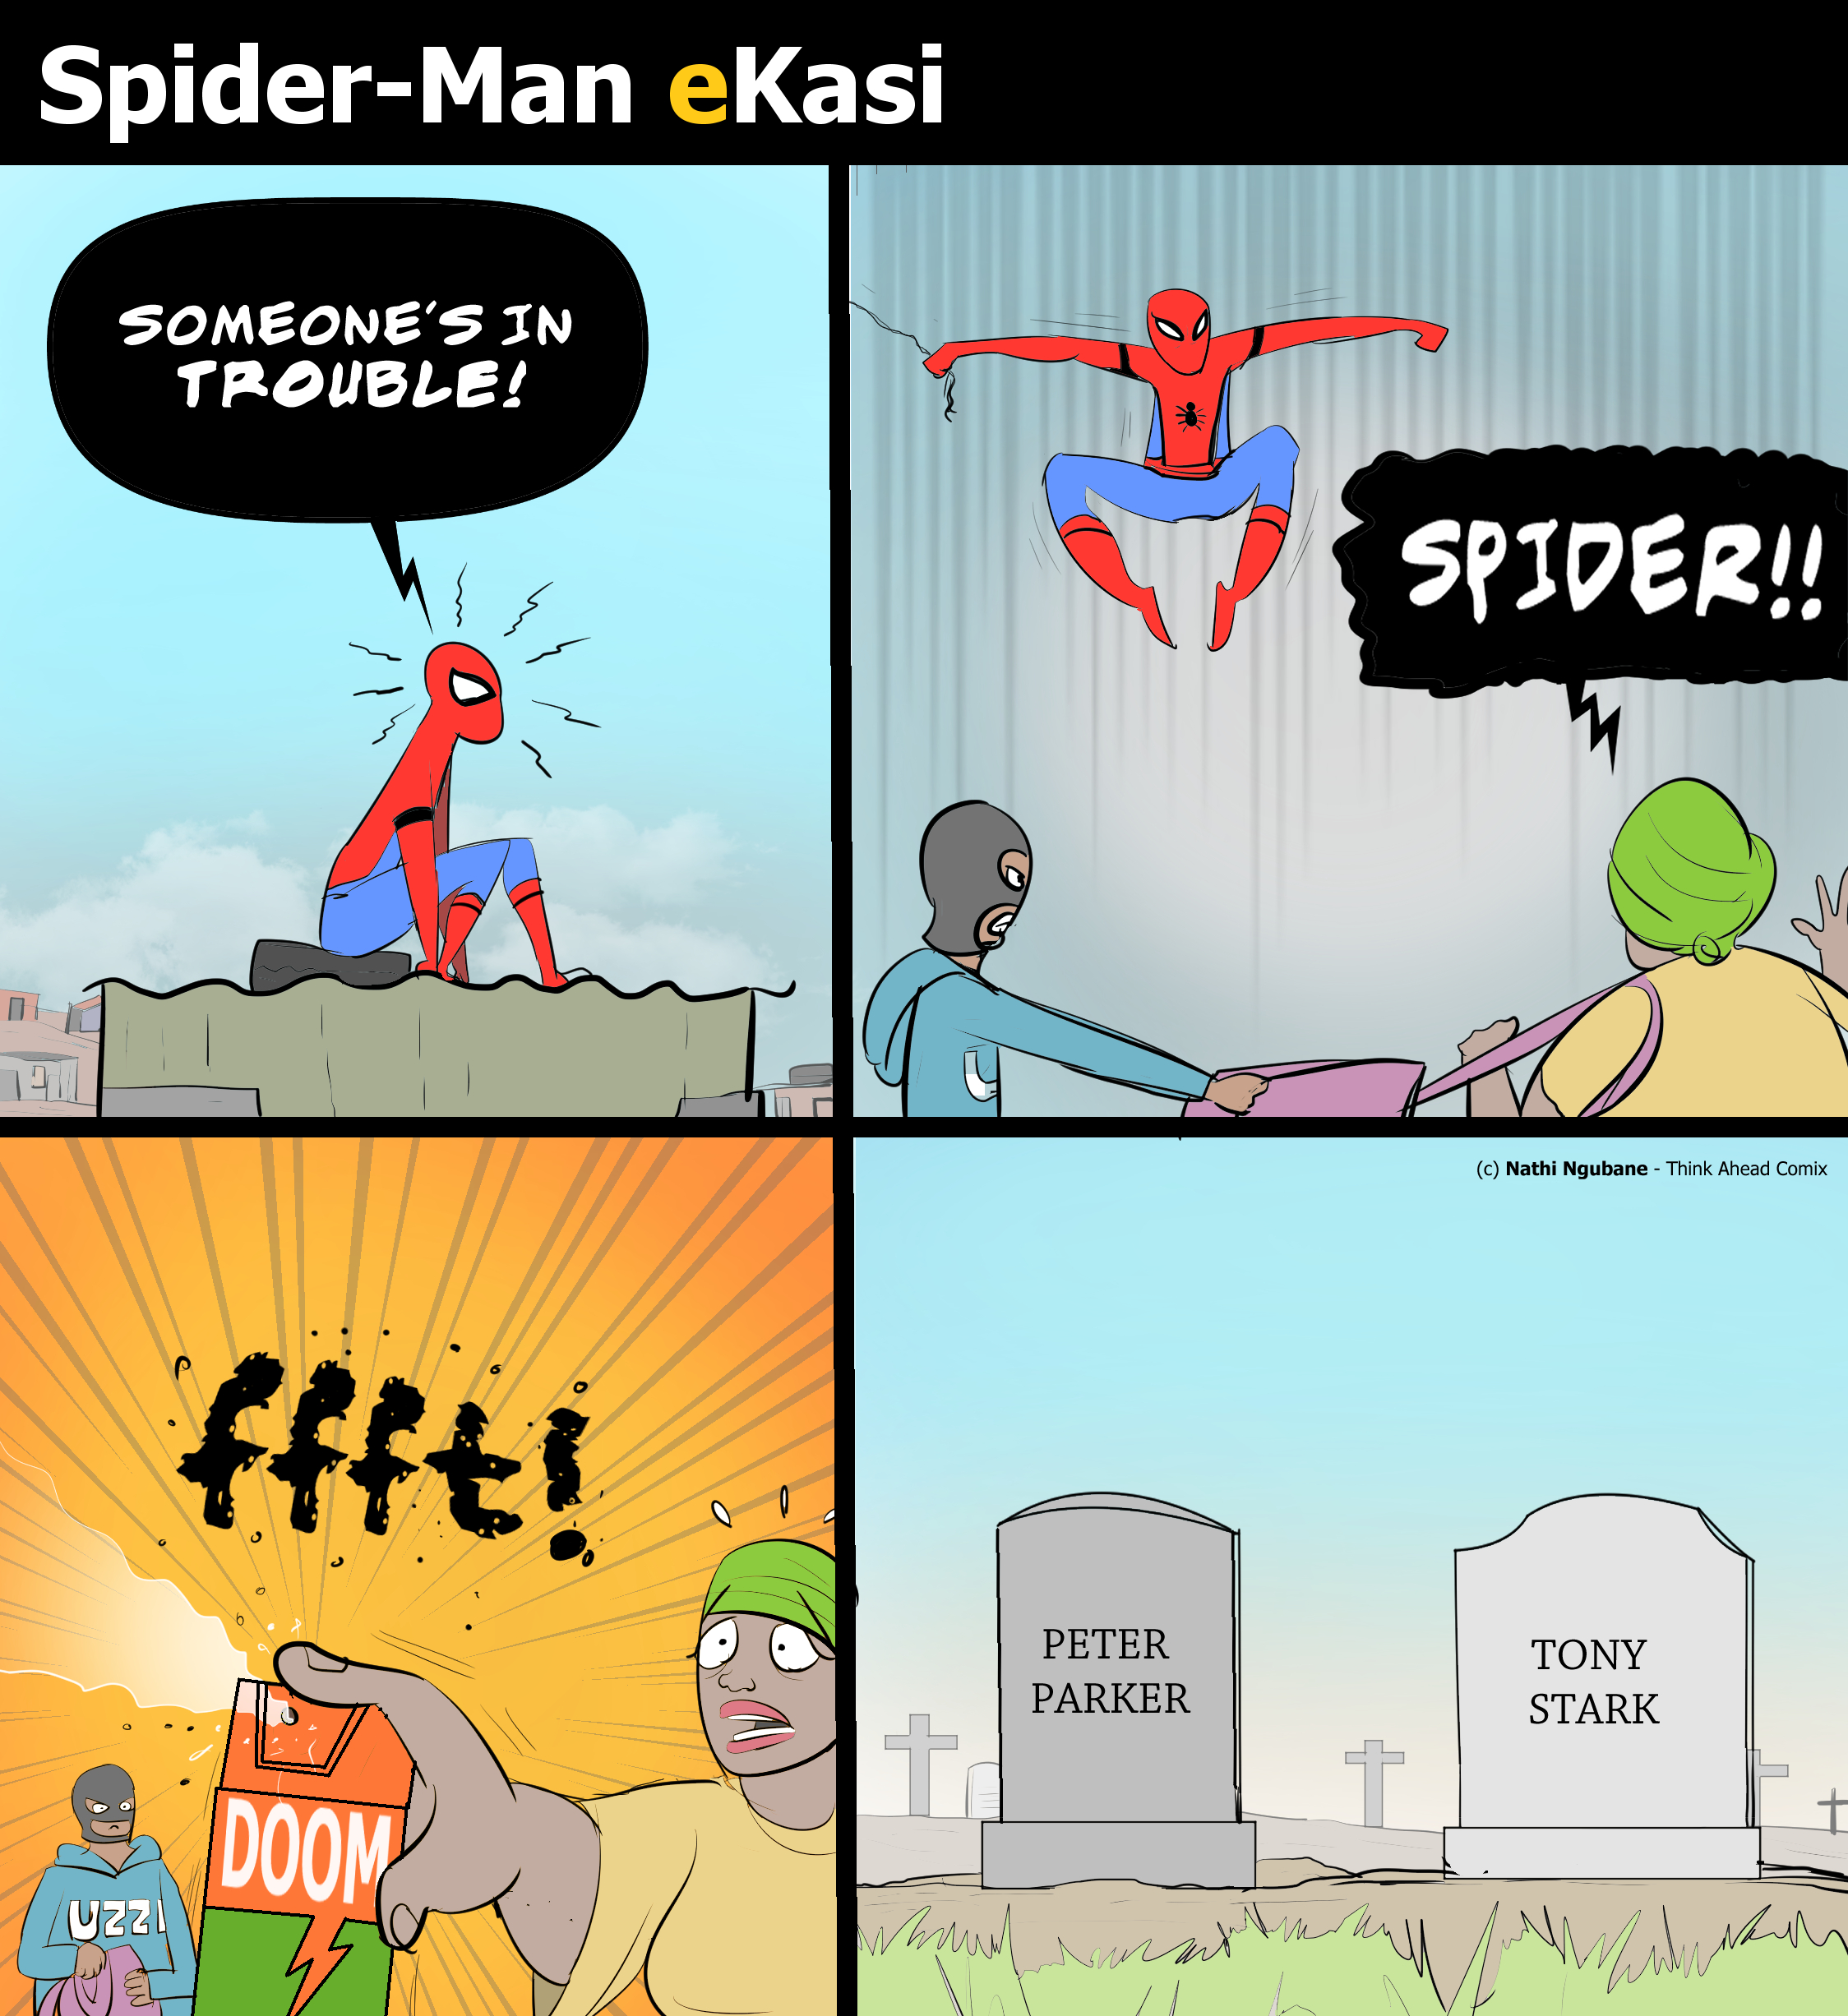 Spider-Man in SA comic strip